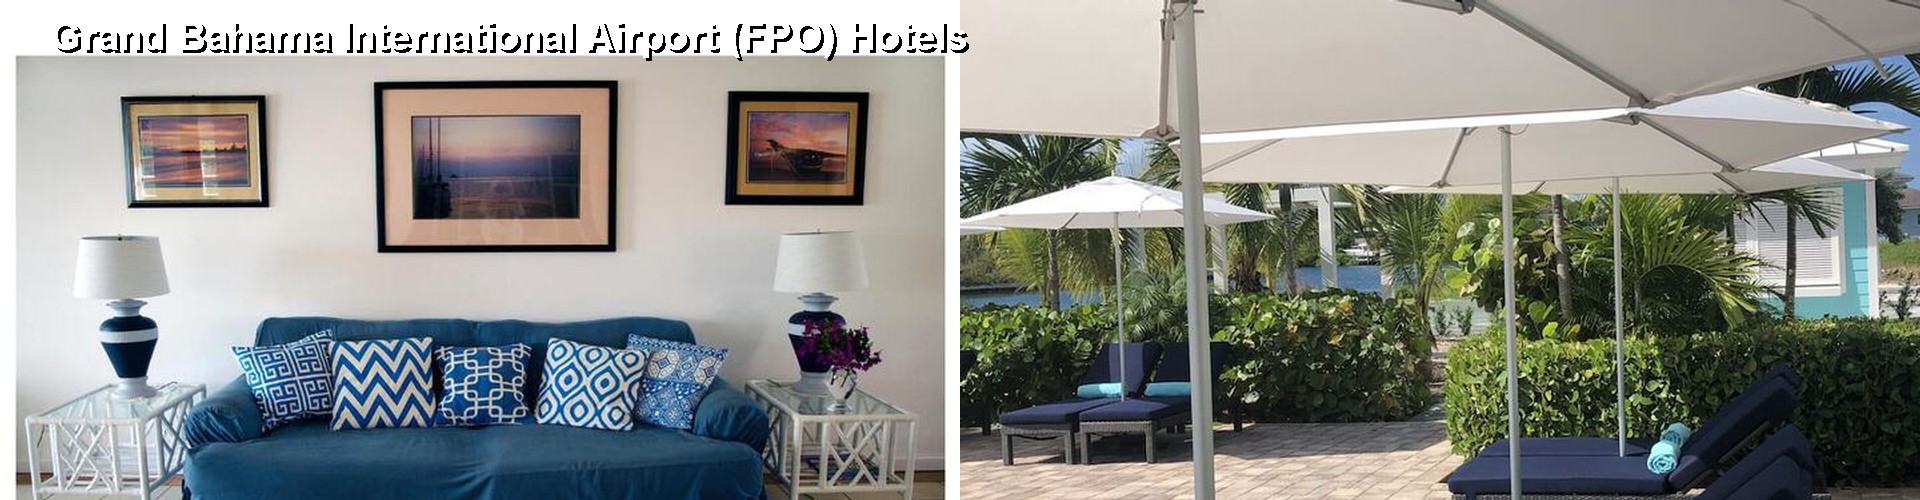 5 Best Hotels near Grand Bahama International Airport (FPO)